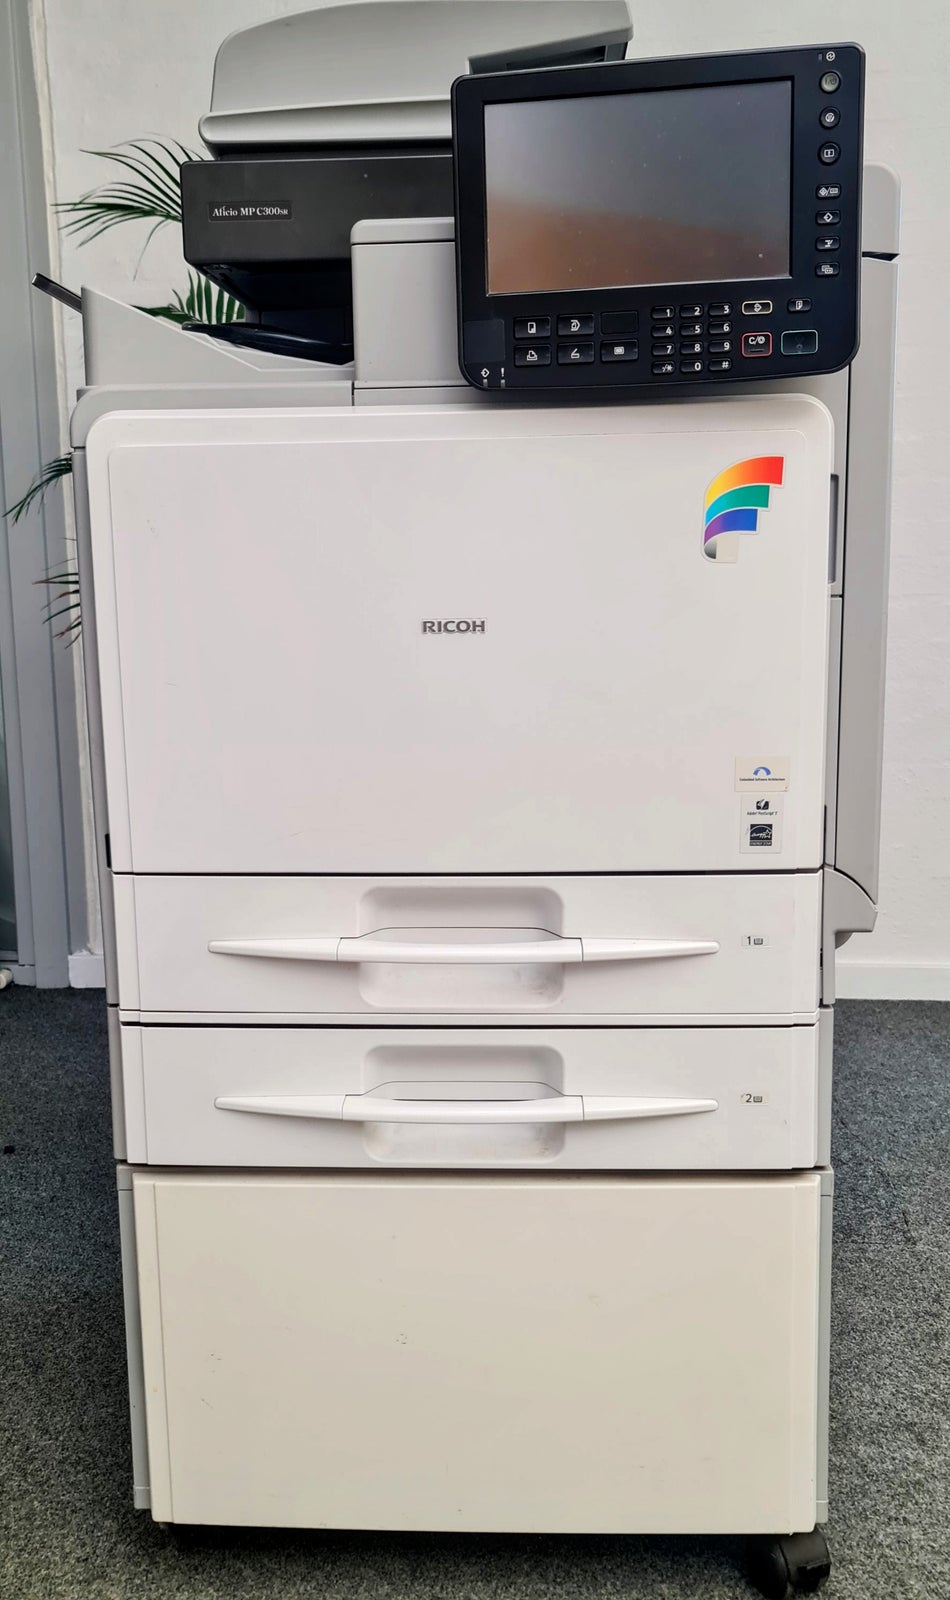 Printer/kopimaskine Ricoh MP C300 ny serviceret